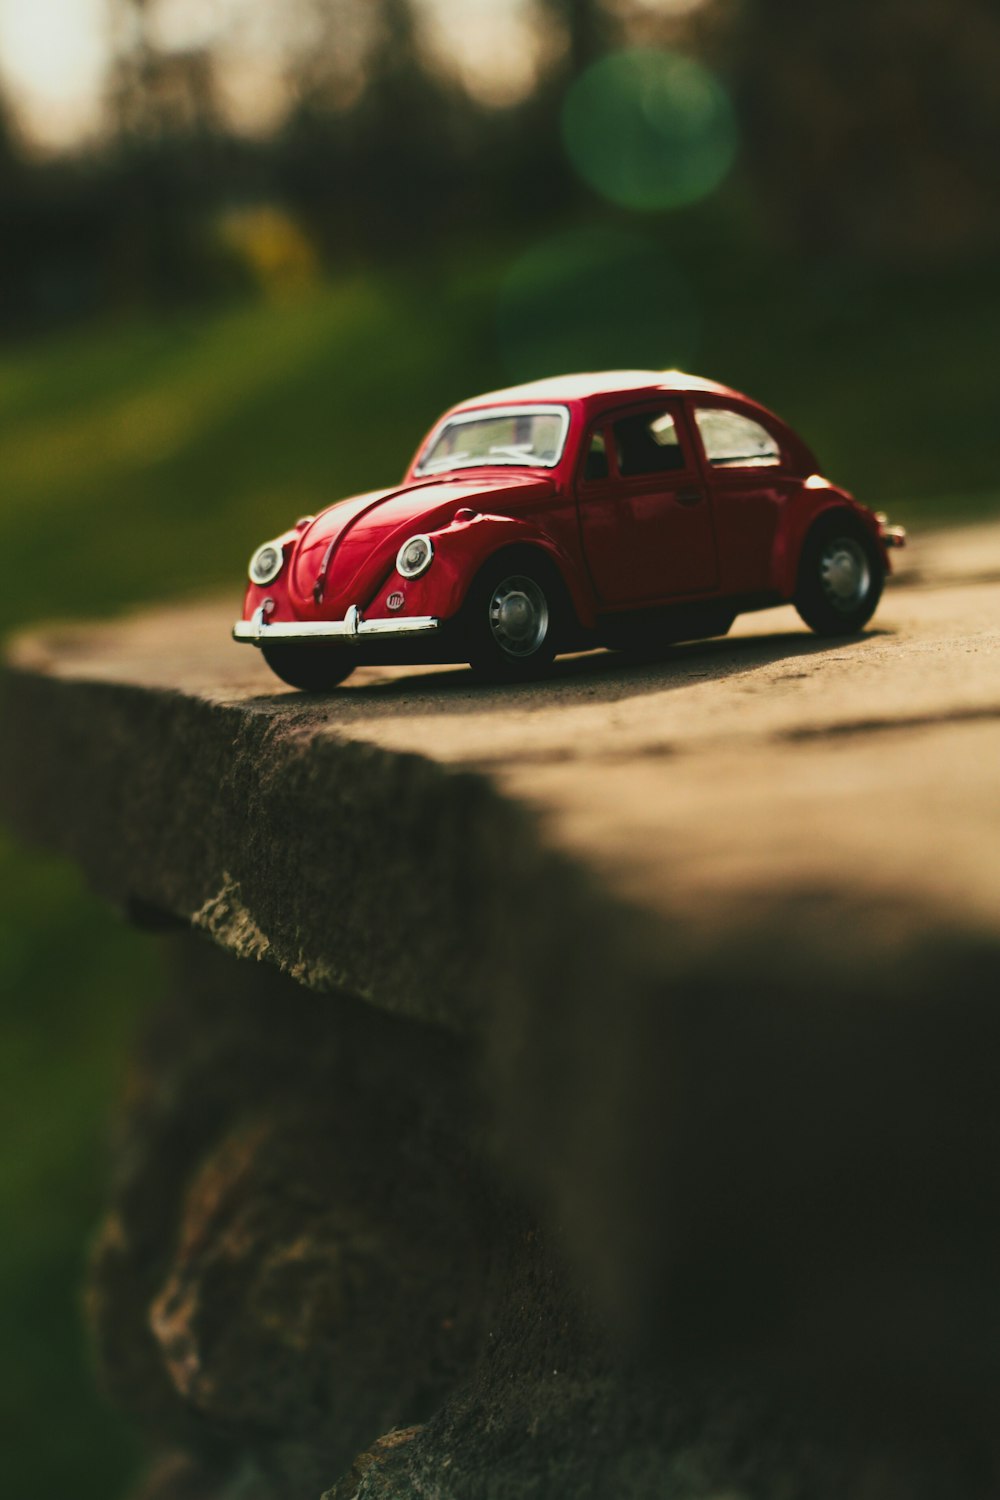 red Volkswagen Beetle scale model on grey concrete board